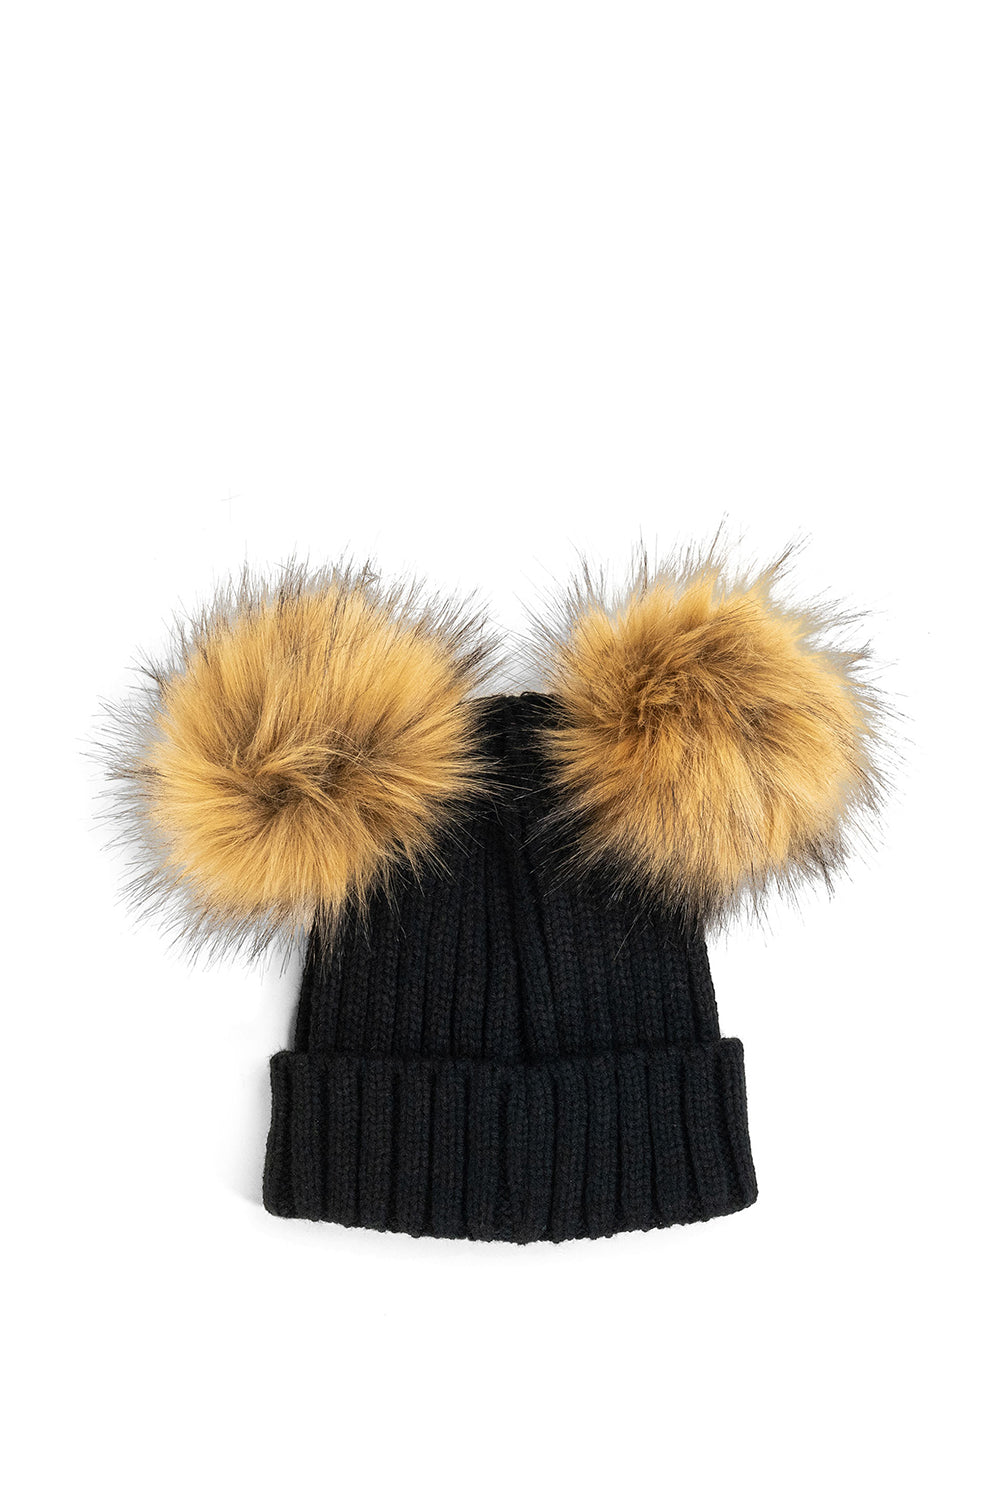 My Accessories London Knitted Double Fur Pom Beanie in Black | Hat | Pom Pom | Women's Accessories | Autumn | Winter | Basics | Ski